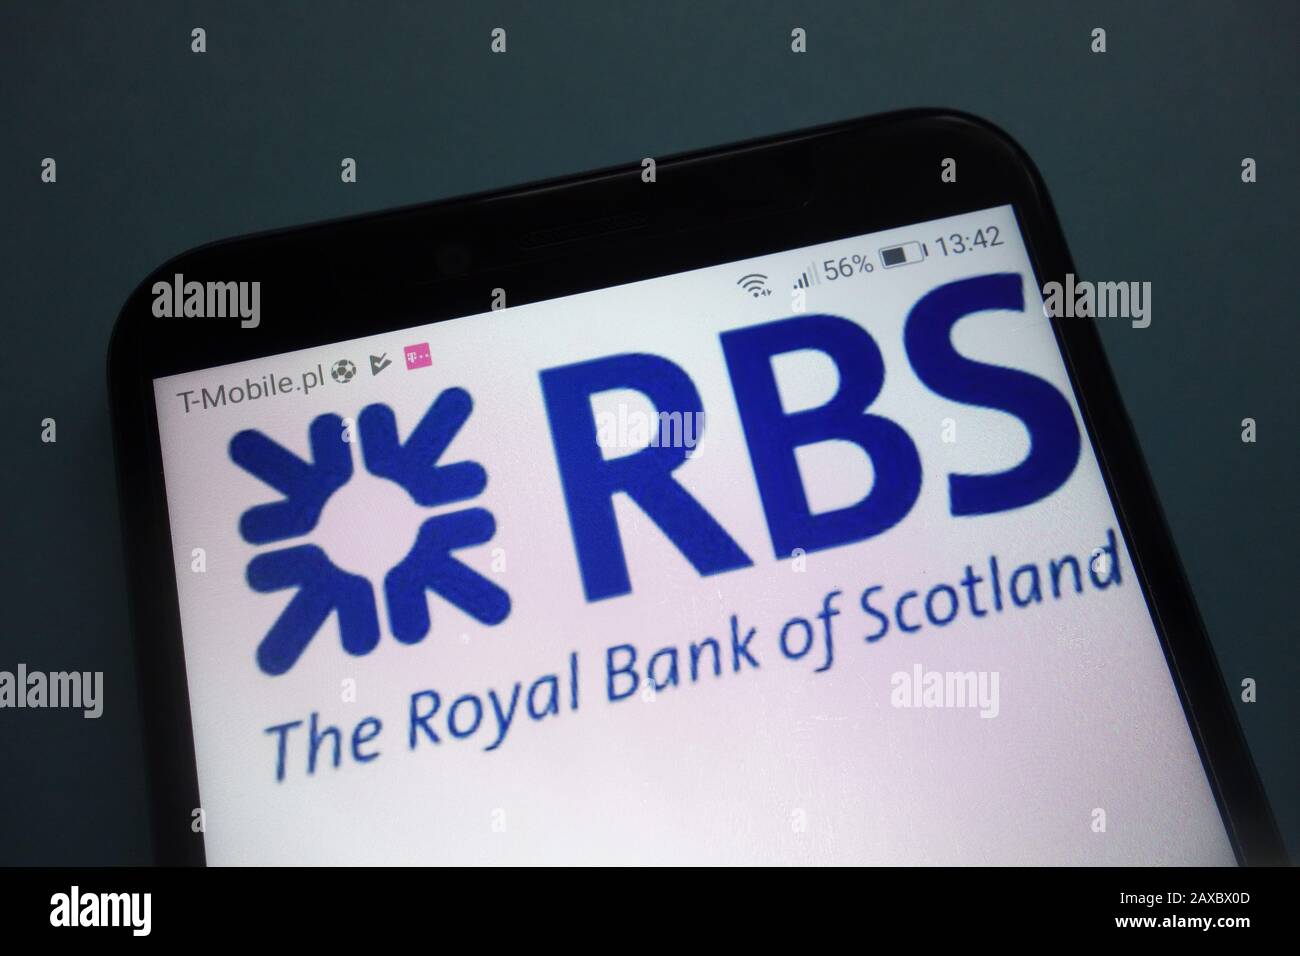 Royal Bank of Scotland logo on smartphone Stock Photo